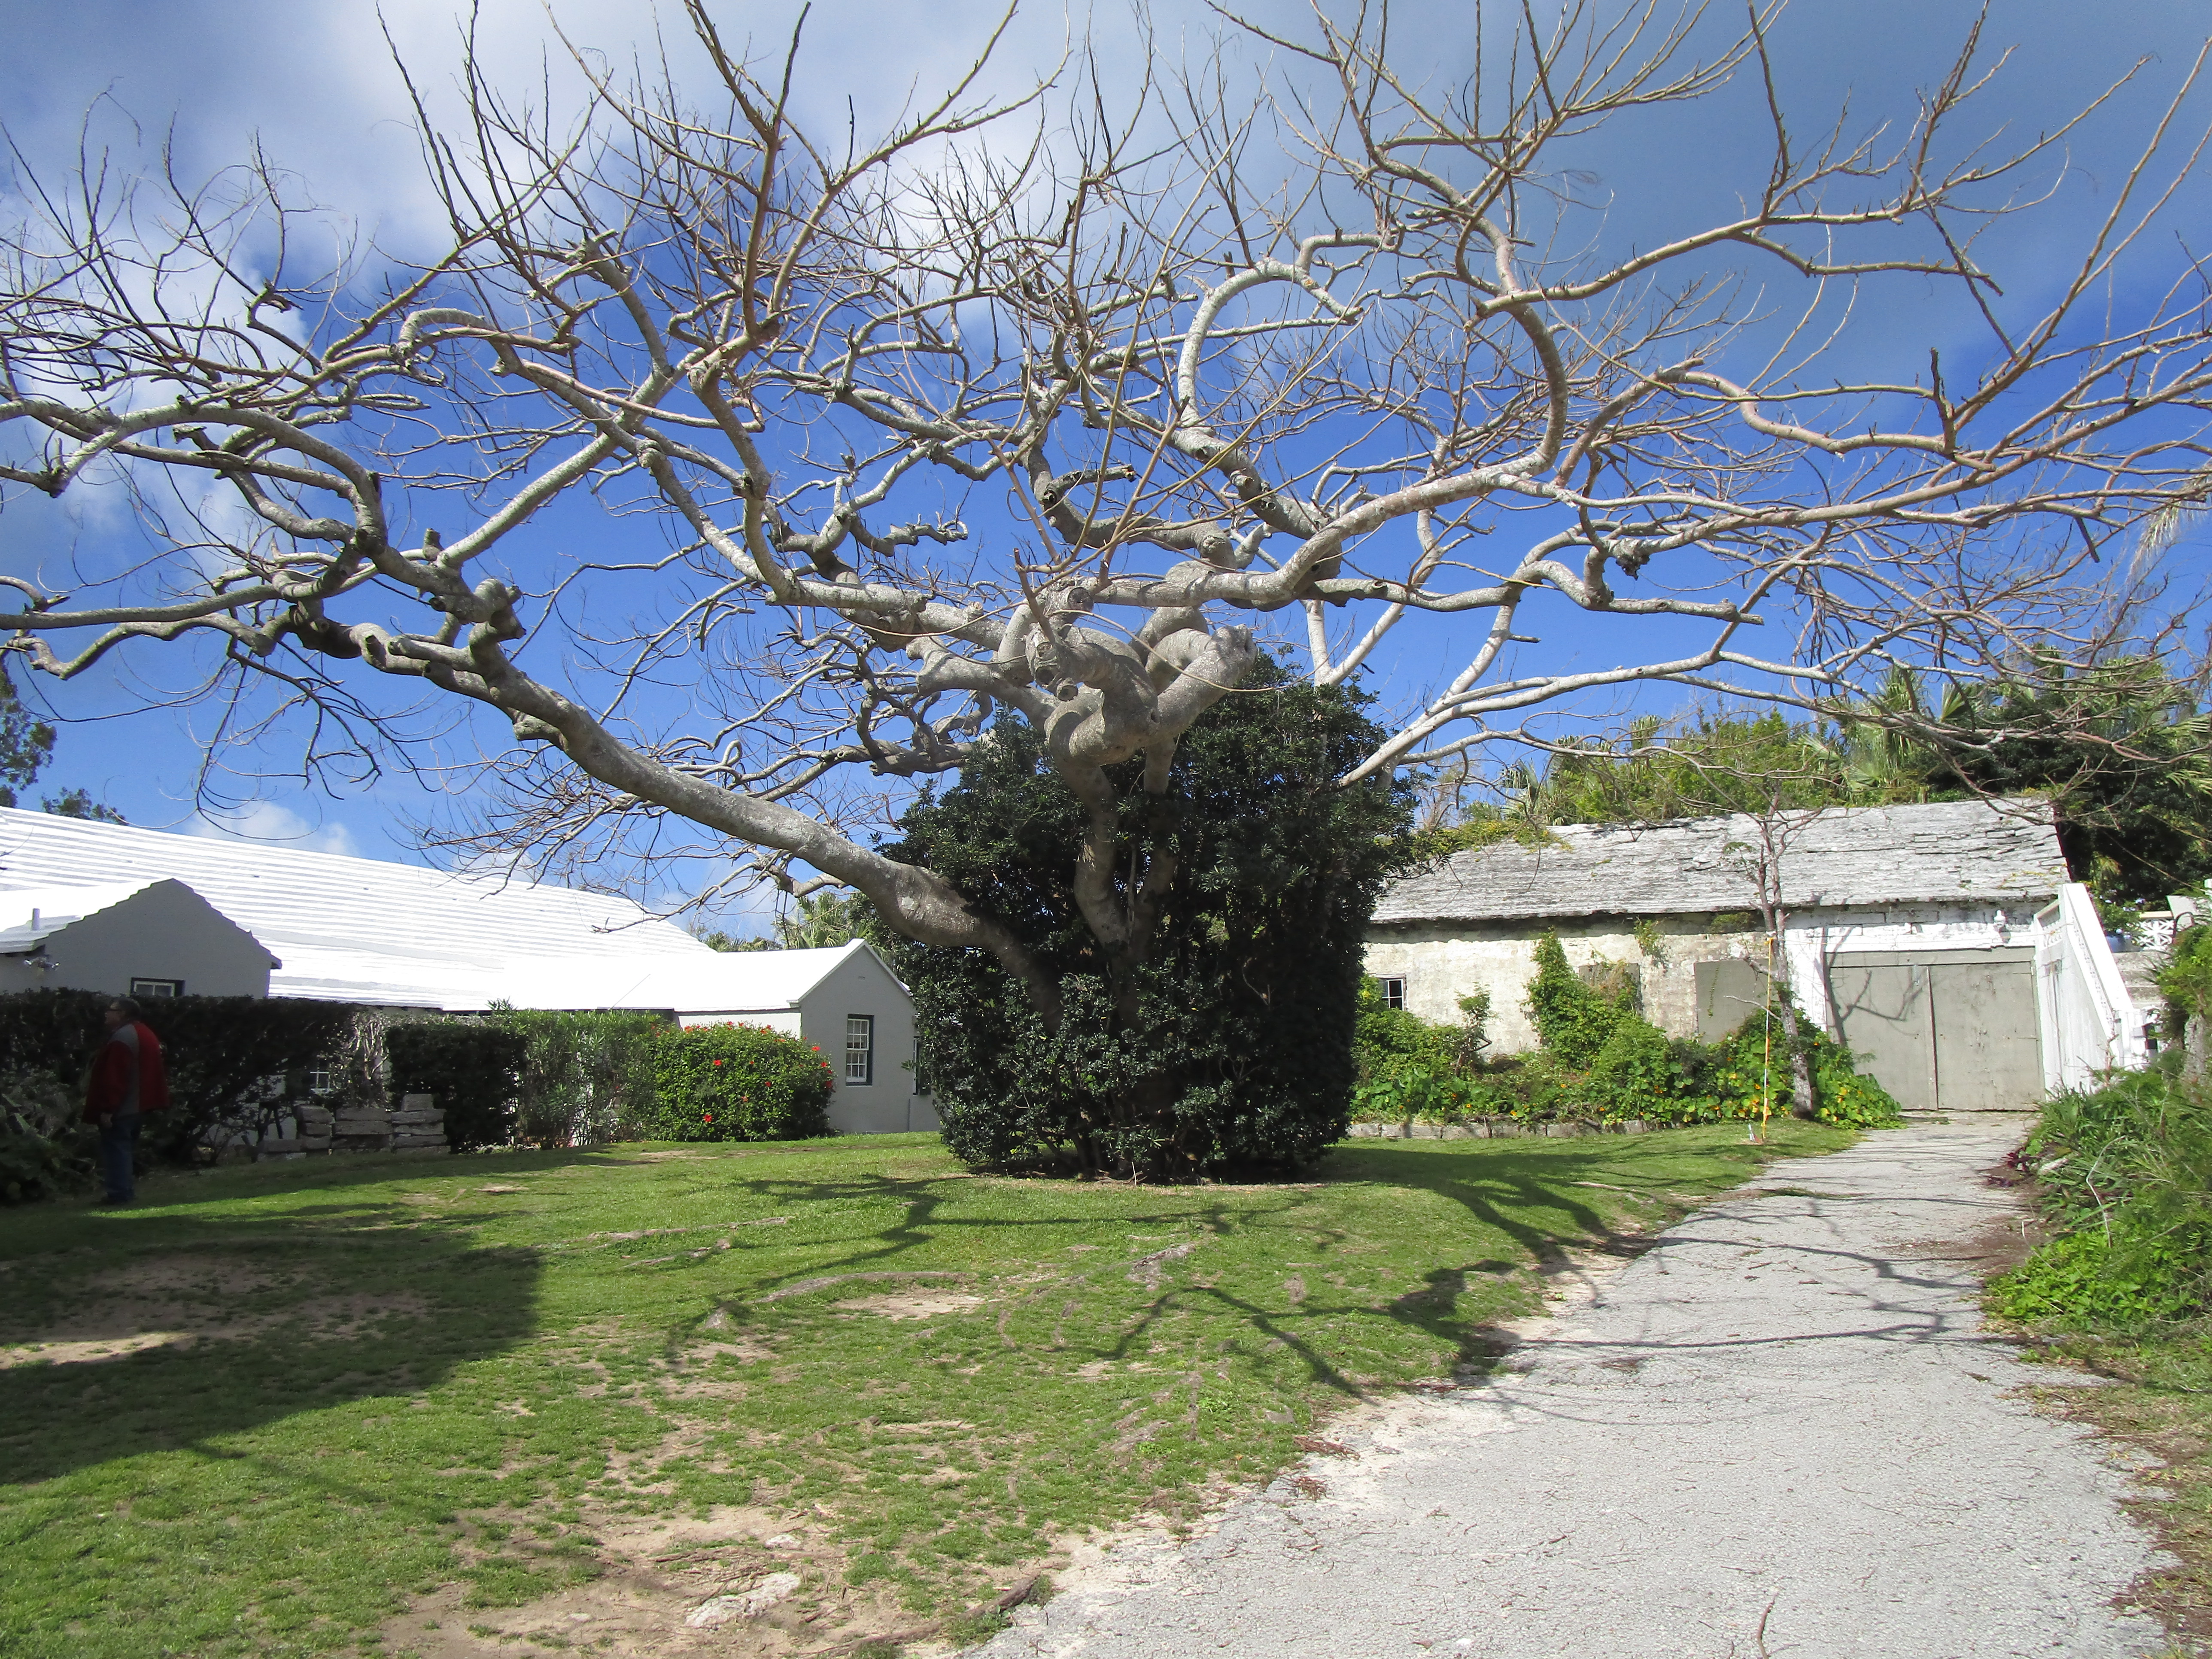 Bermuda---24-Tree-behind-Unfinished-Church.JPG